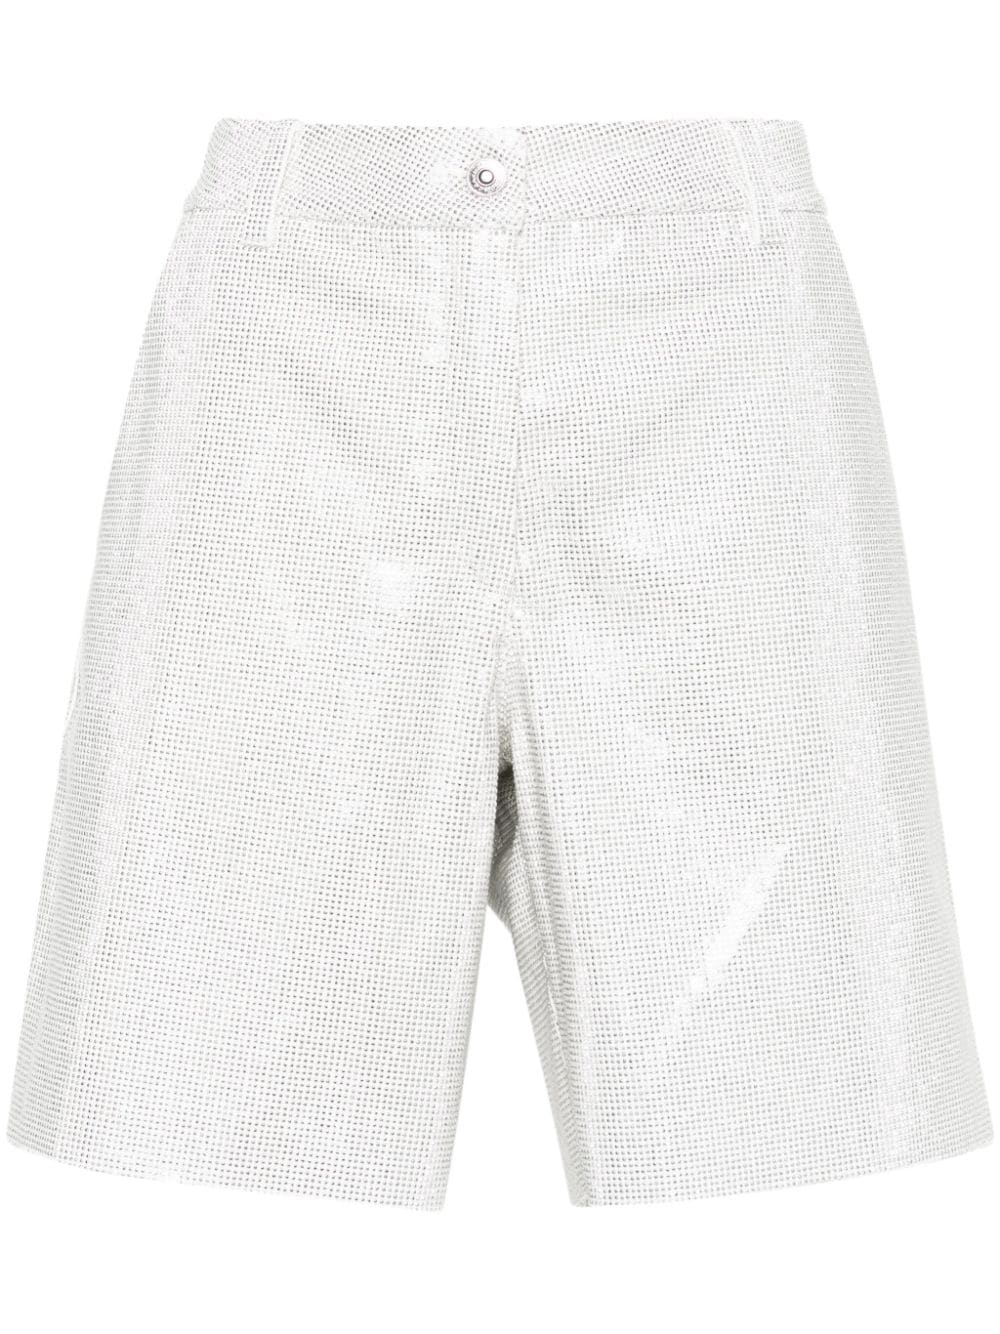 ERMANNO SCERVINO White Crystal Embellished High-Waisted Cotton Shorts